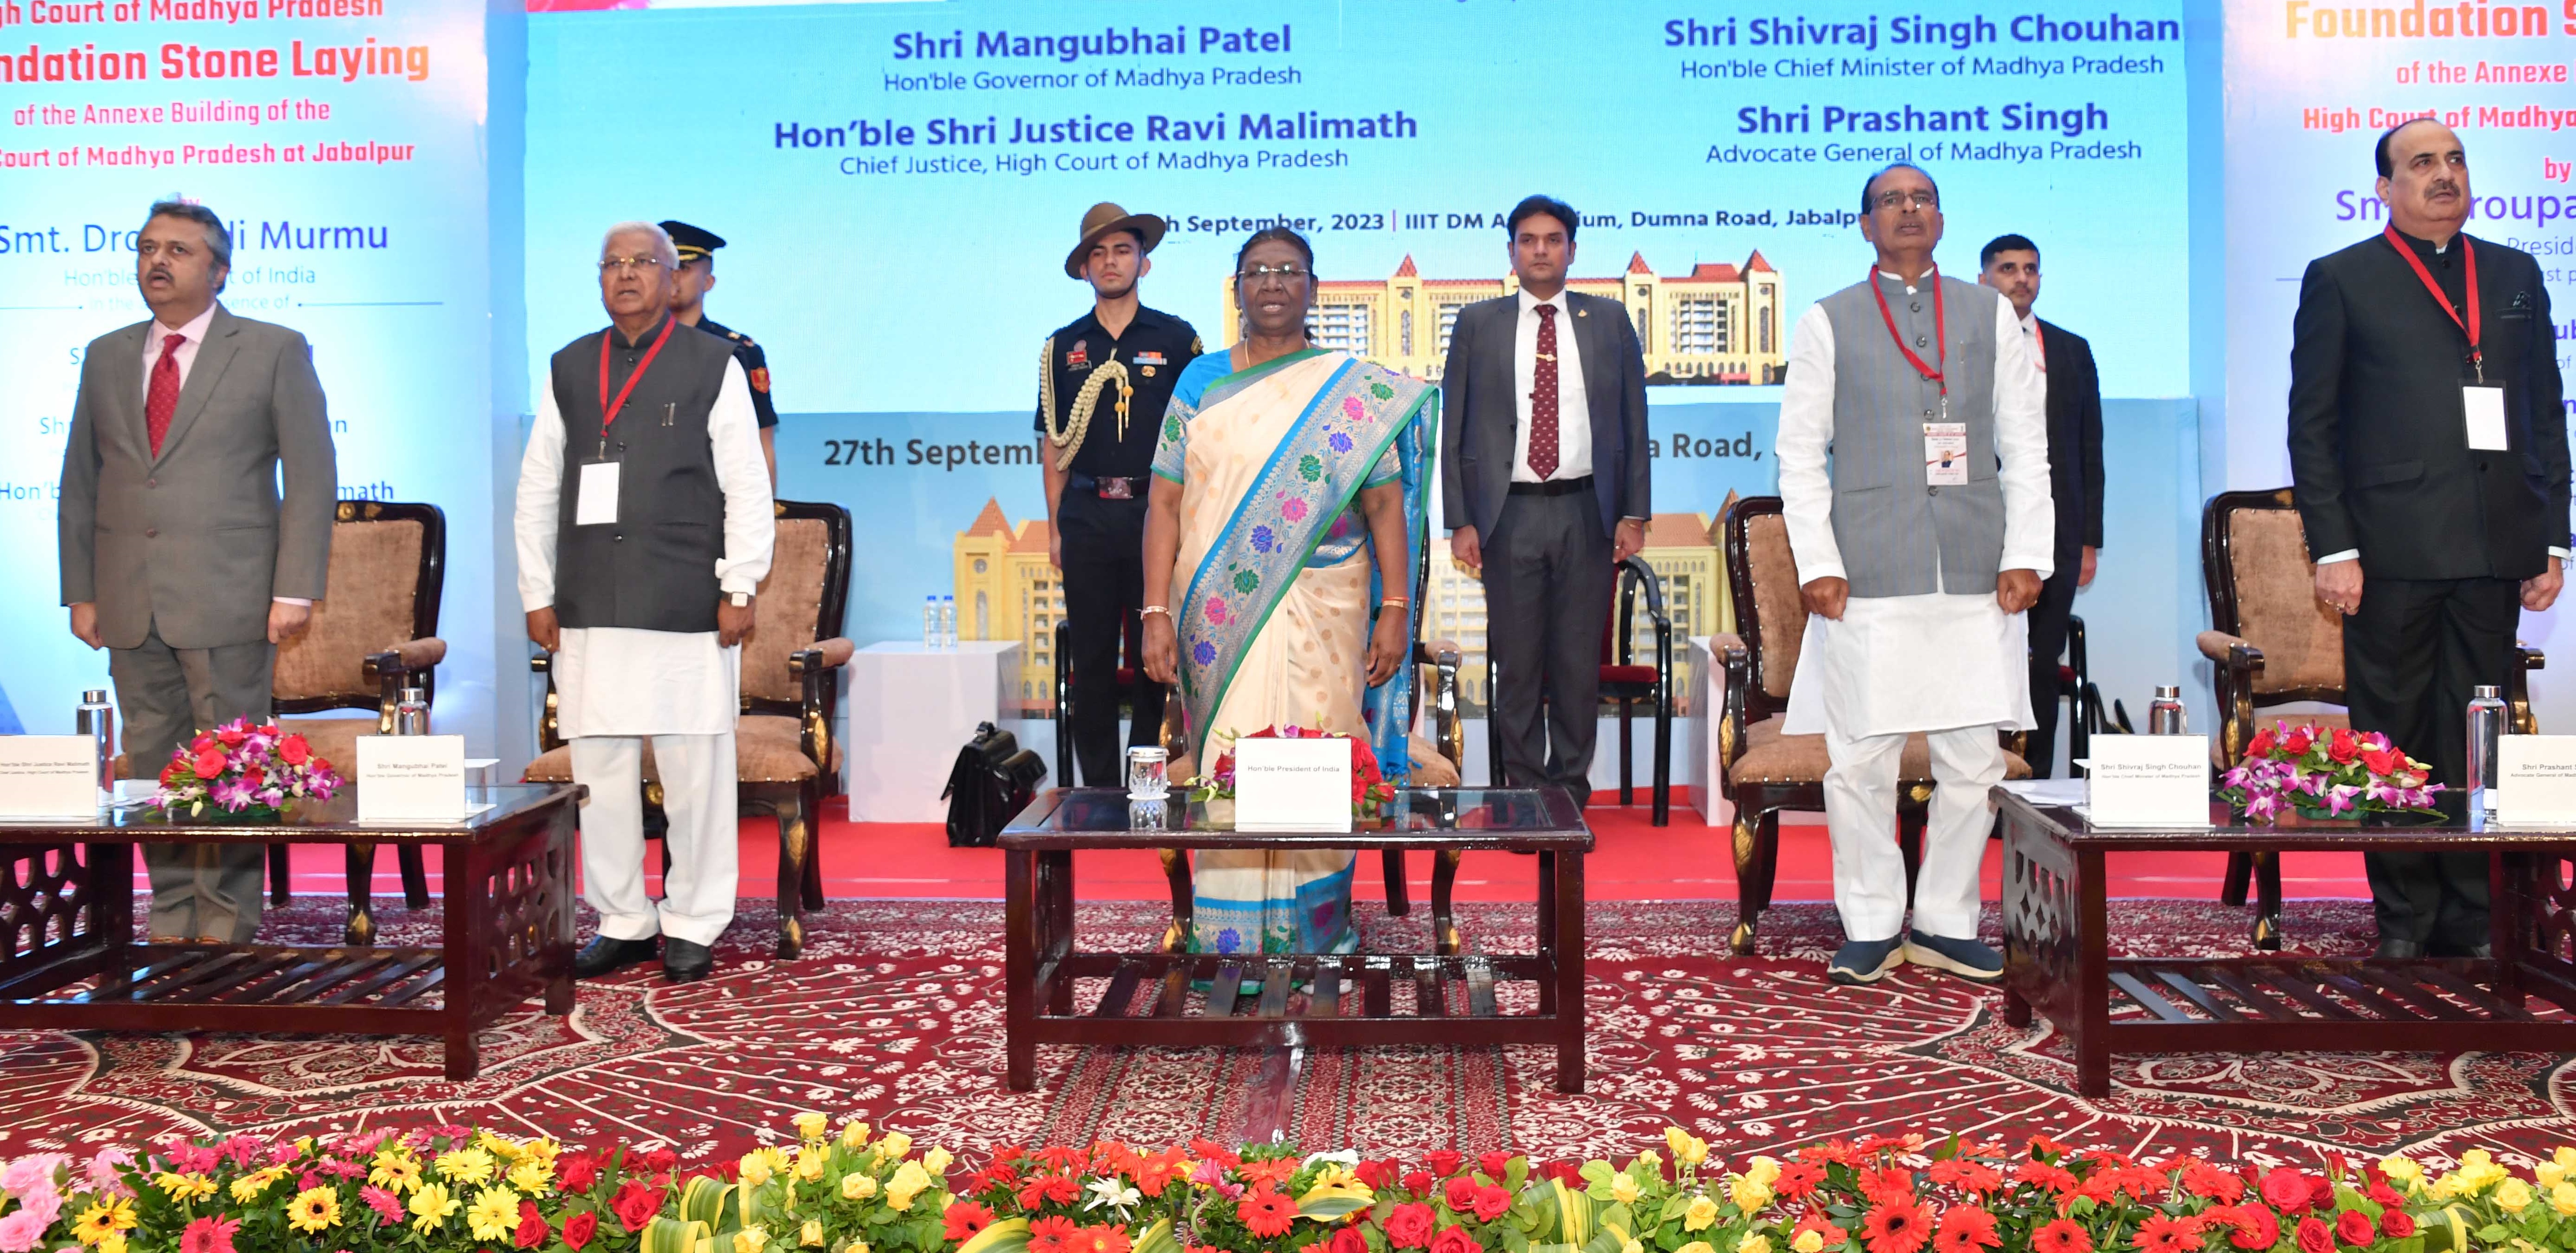 The President of India, Smt Droupadi Murmu laid the foundation stone for the new building of High Court of Madhya Pradesh at Jabalpur, Madhya Pradesh on September 27, 2023.